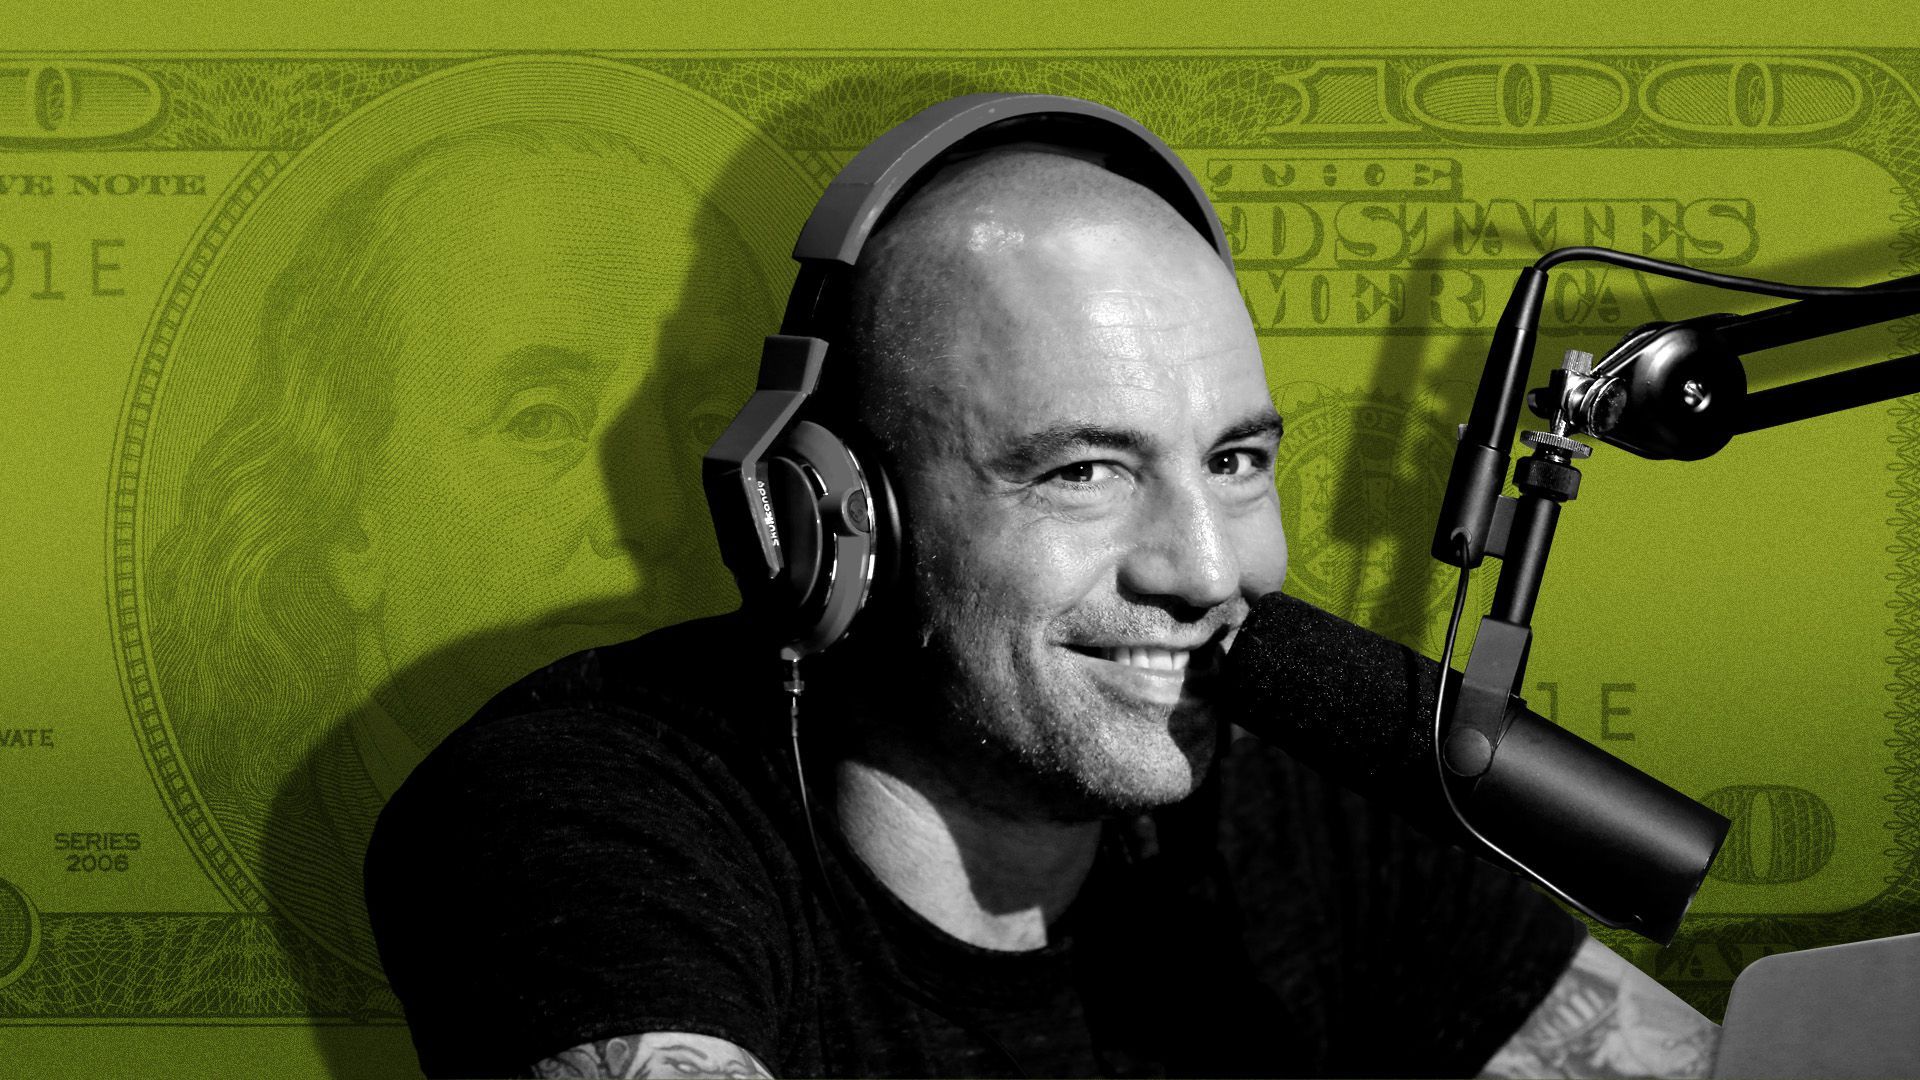 Photo illustration of Joe Rogan at a microphone with a hundred dollar bill behind him